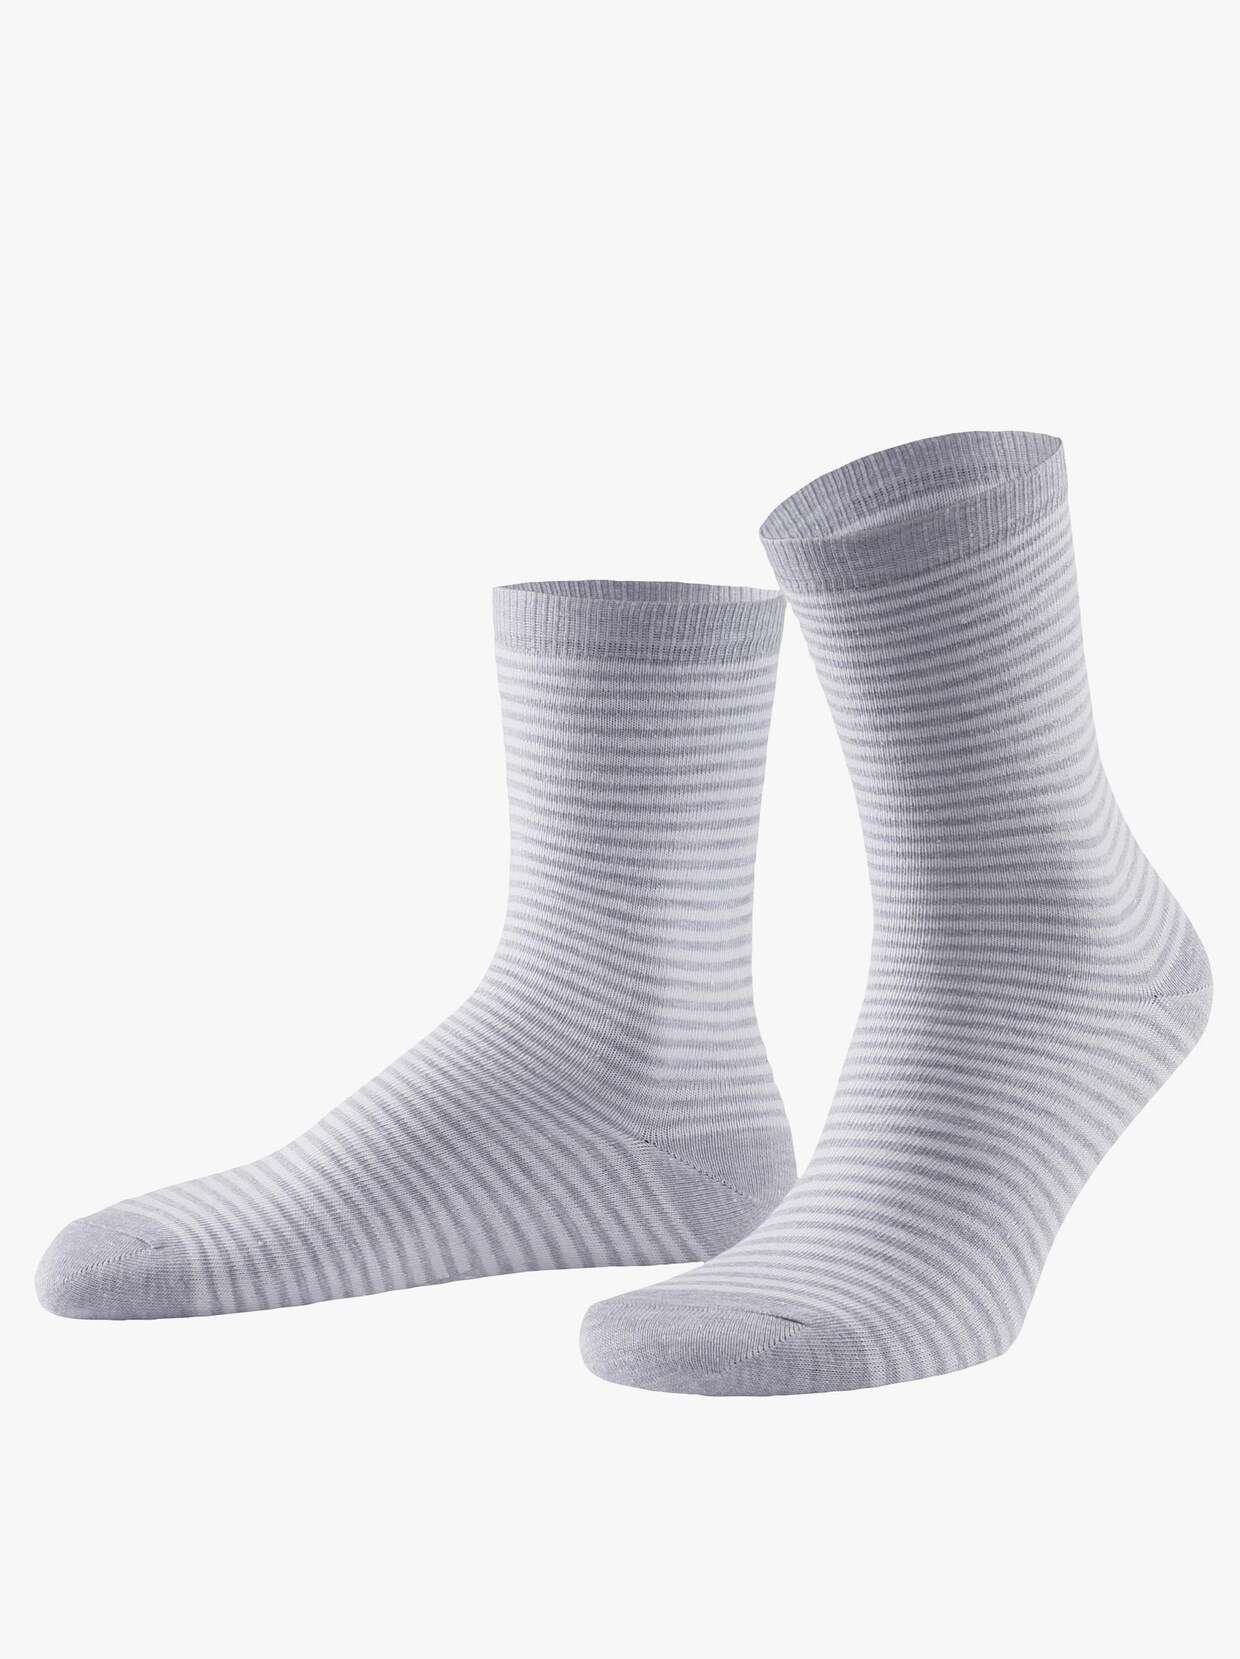 wäschepur Damen-Socken - grau-meliert